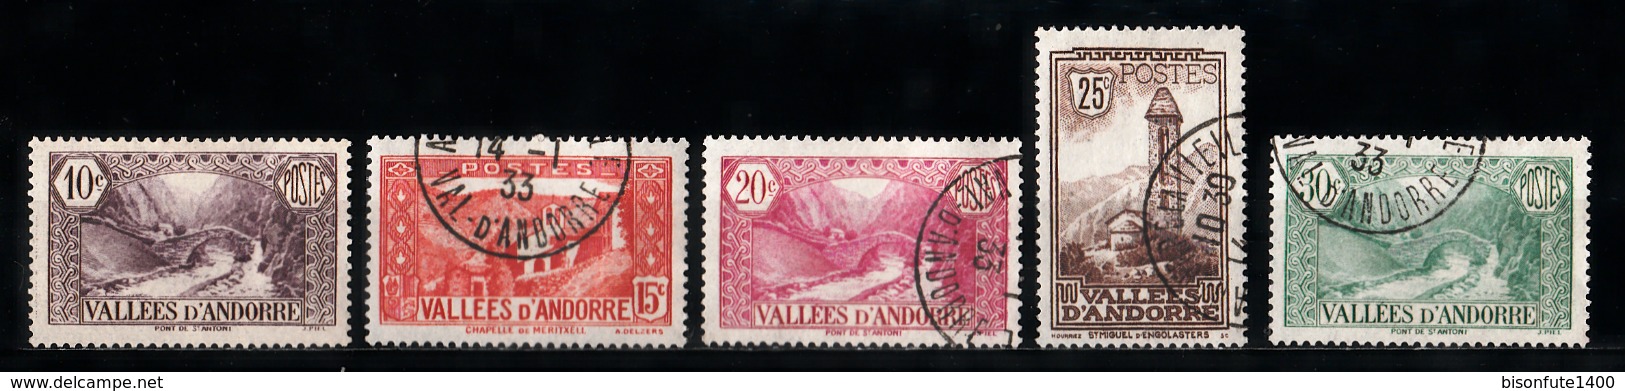 Andorre Français 1932 - 1933 : Timbres Yvert & Tellier N° 24 - 25 - 26 - 27 - 28 - 29 - 30 - 31 - 32 - 33 - 34 - 35 - .. - Gebraucht